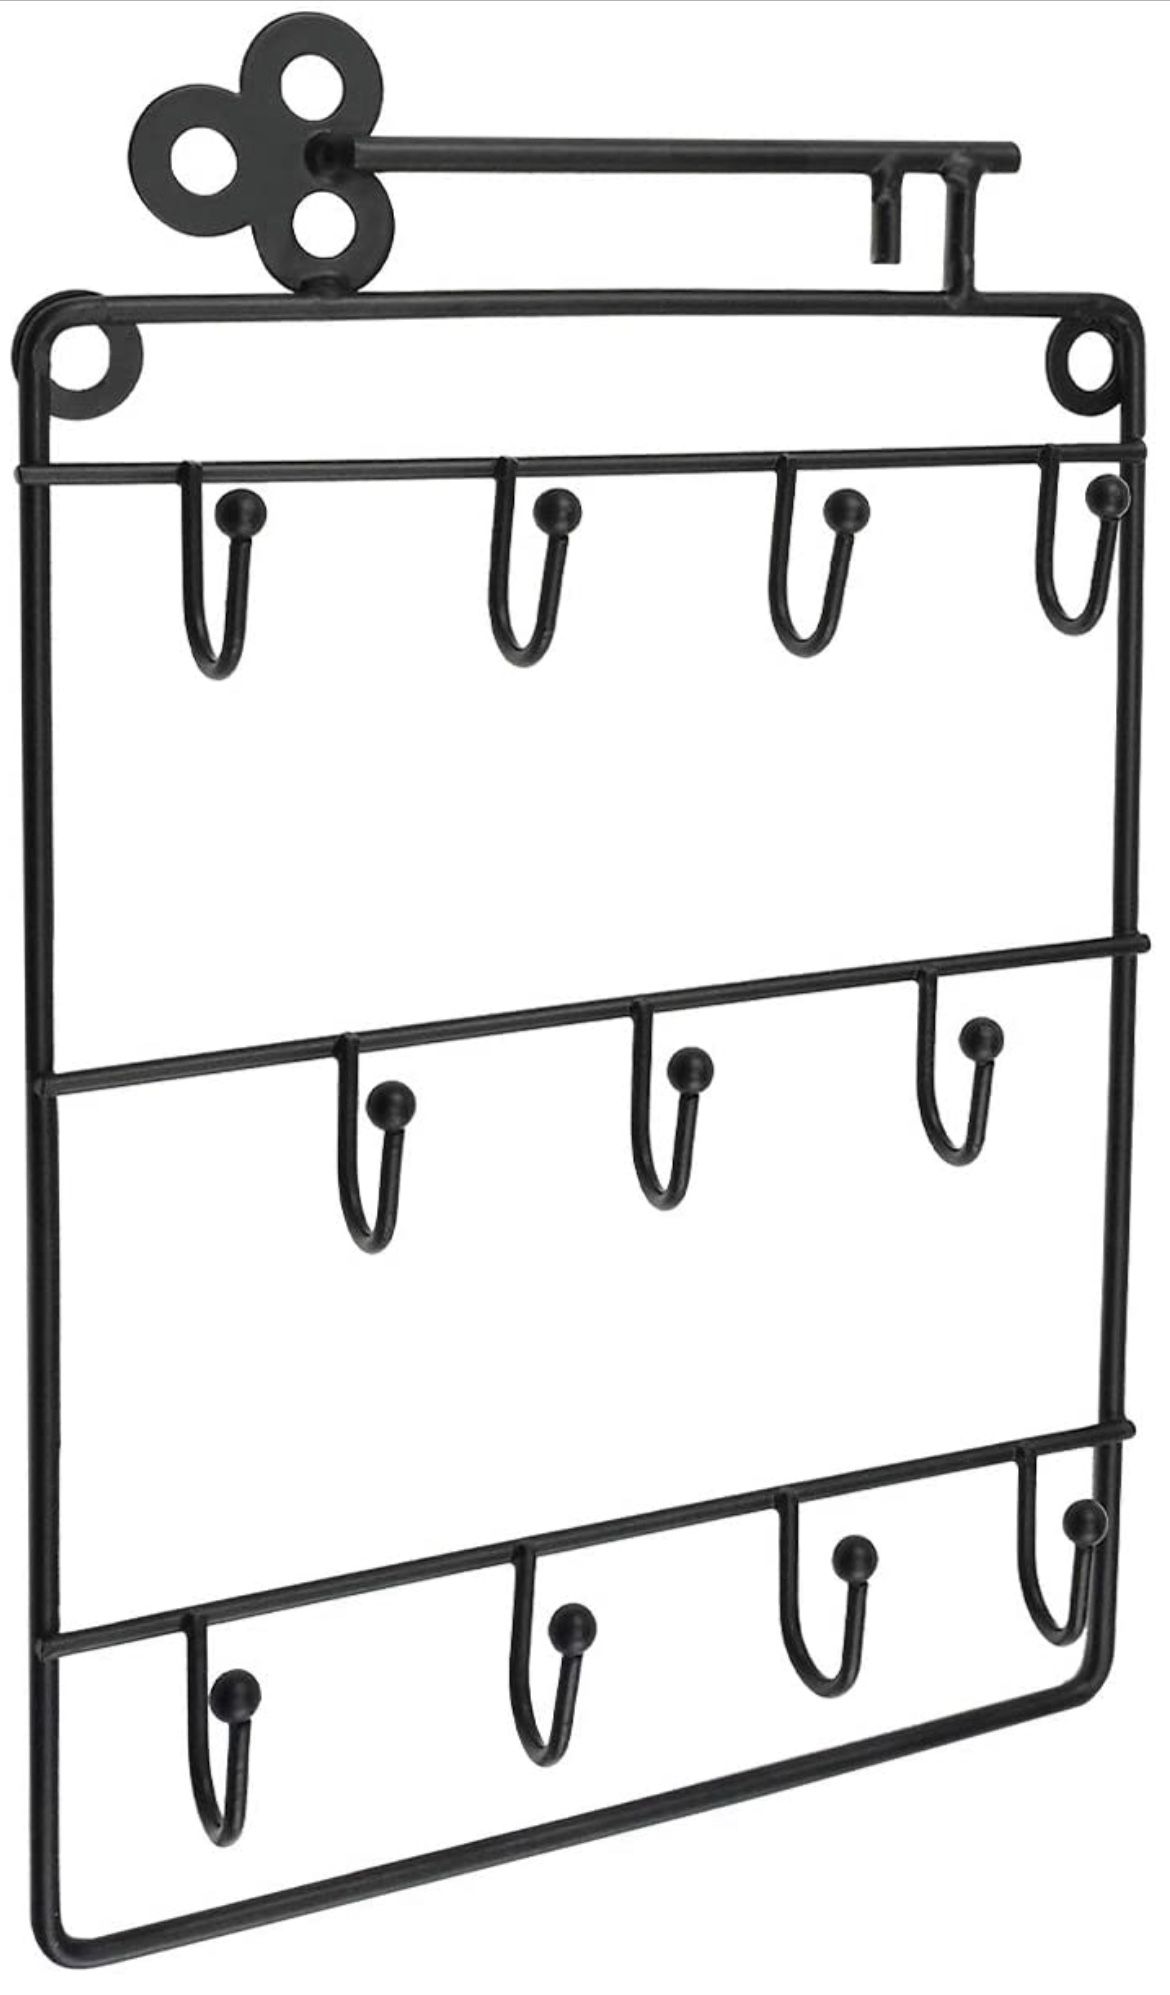 Feilifan Key Rack,Decorative Wall Mounted Holder with 11 Key Hook Key Rack Holder Organizer Metal Key Holder